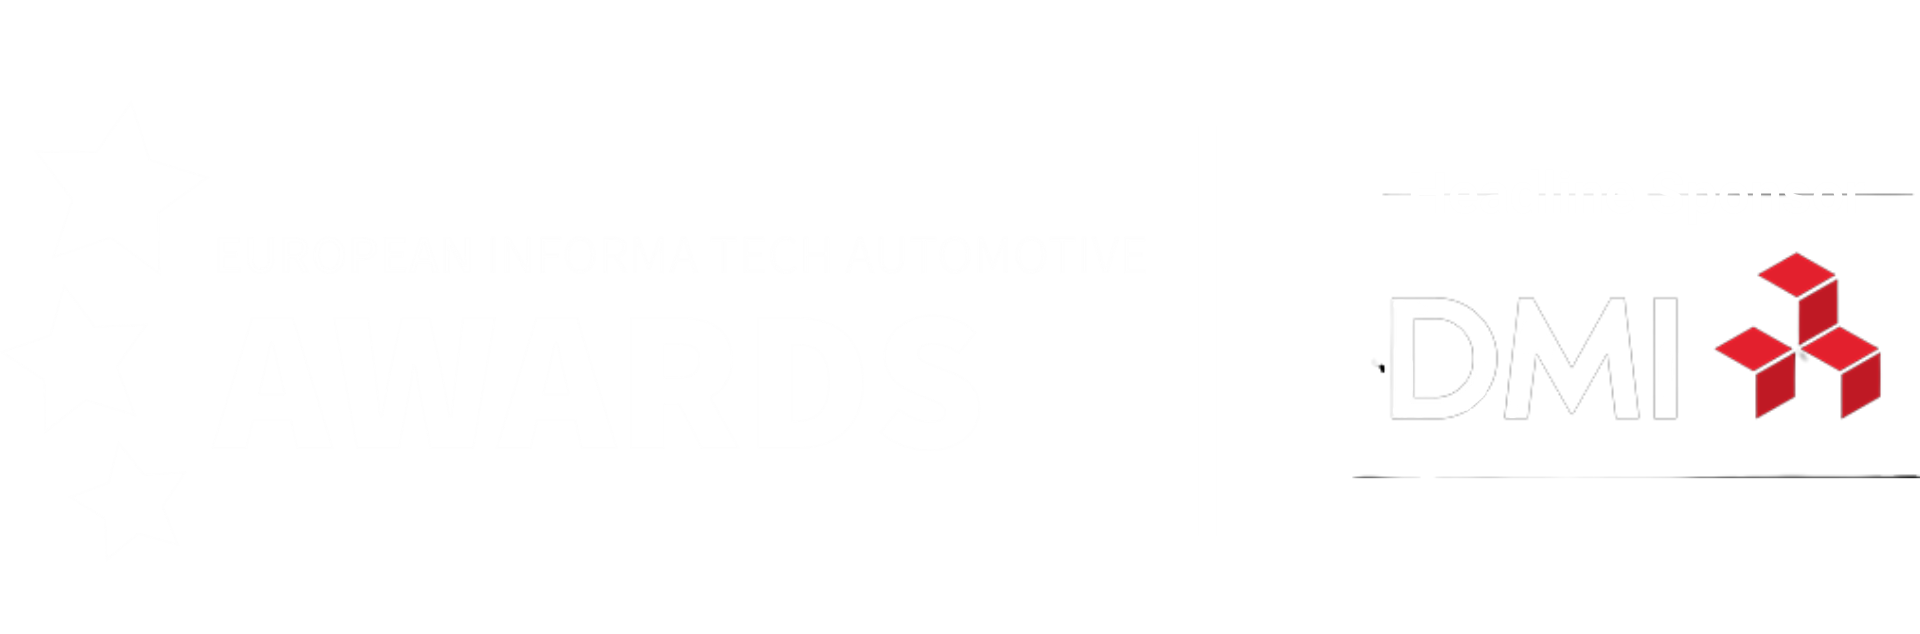 European Informa Tech Automotive Awards